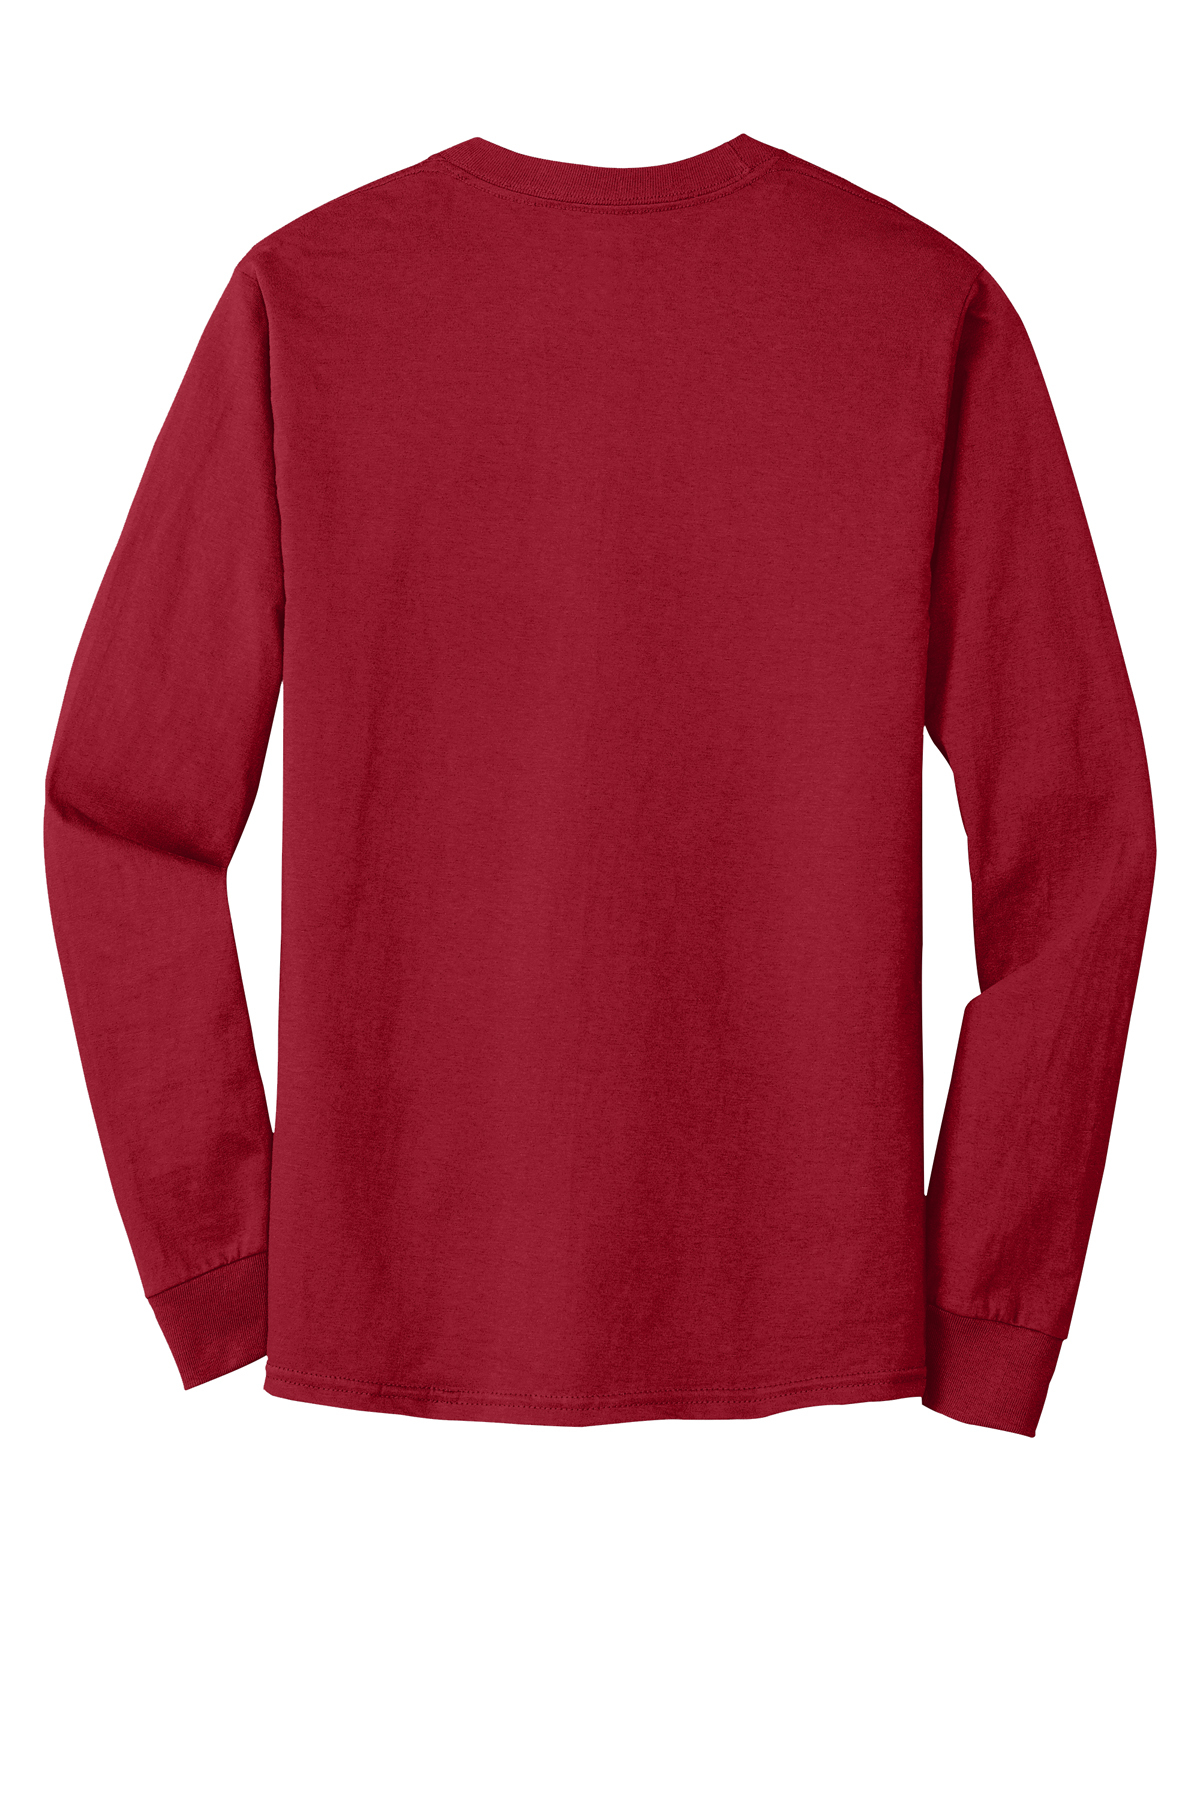 Hanes Pre-Shrunk 100% Cotton NICERIDE T-Shirt Long Sleeve Low Tide 